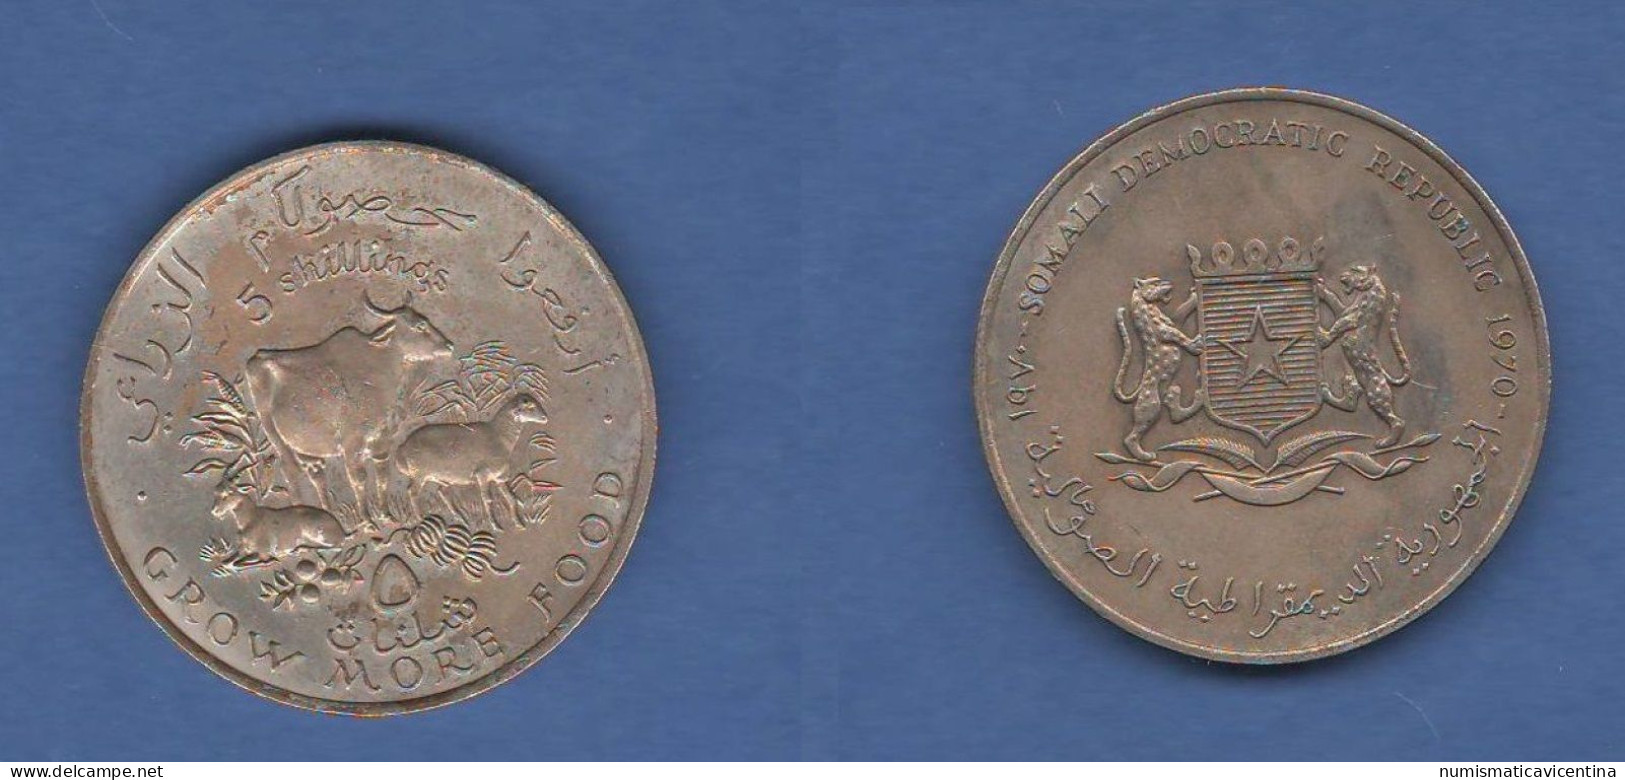 FAO Somalia 5 Shillings 1970 Republic Democratic Somalie Nickel Coin - Somalië